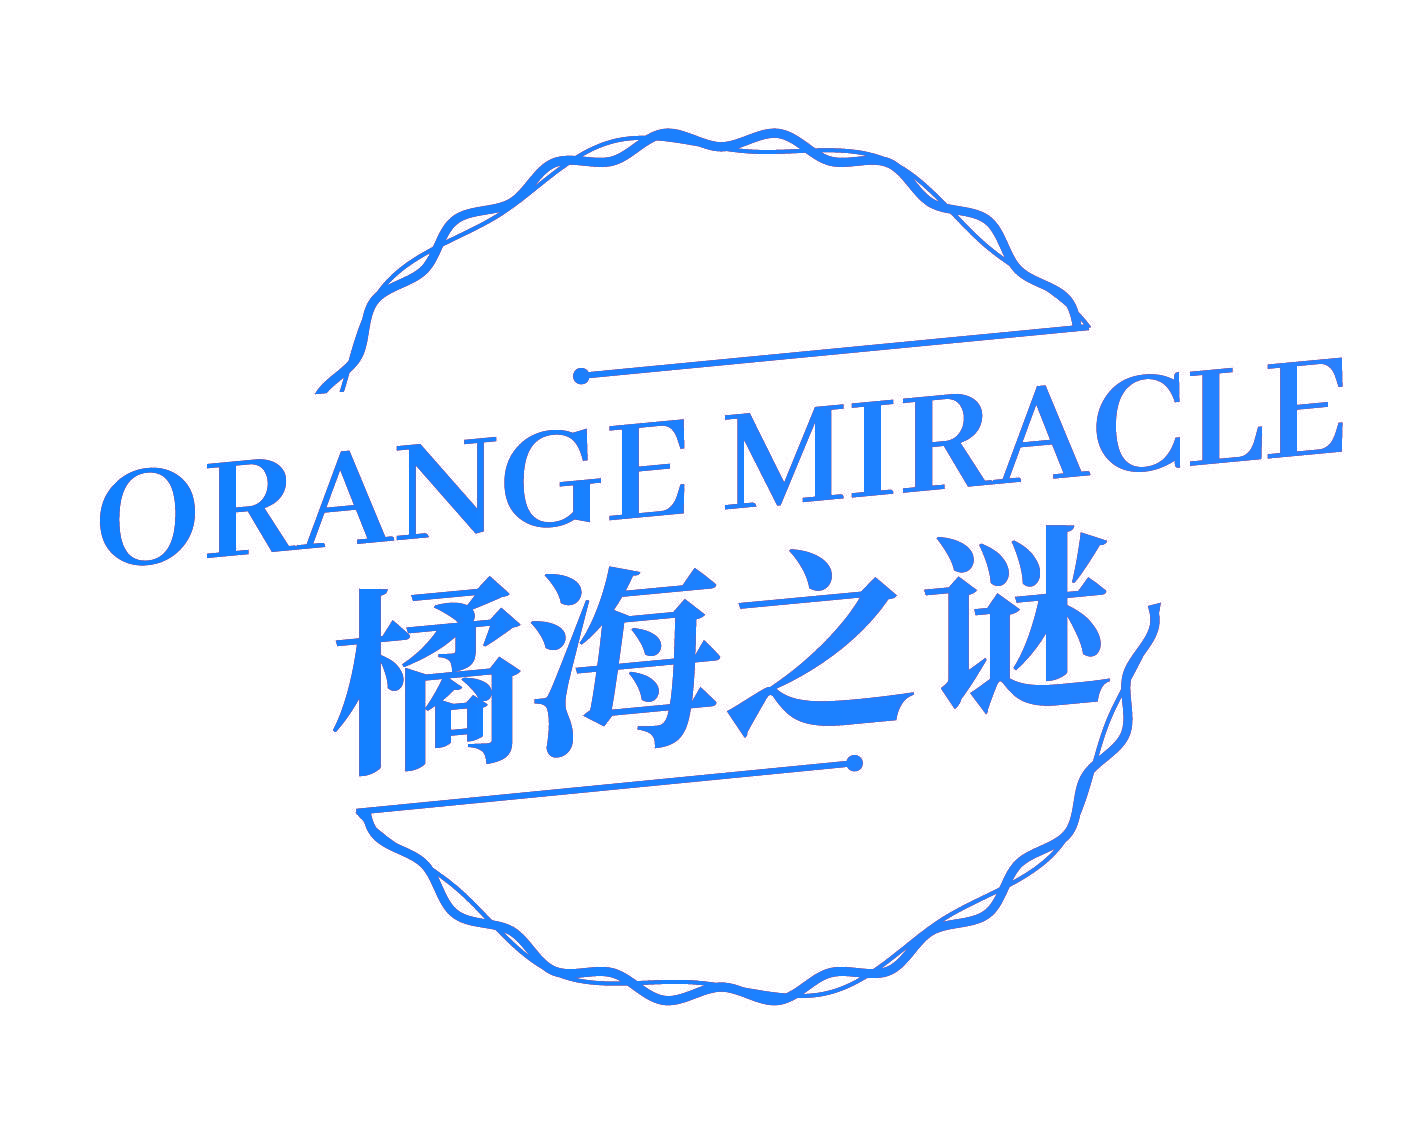 ORANGE MIRACLE 橘海之谜